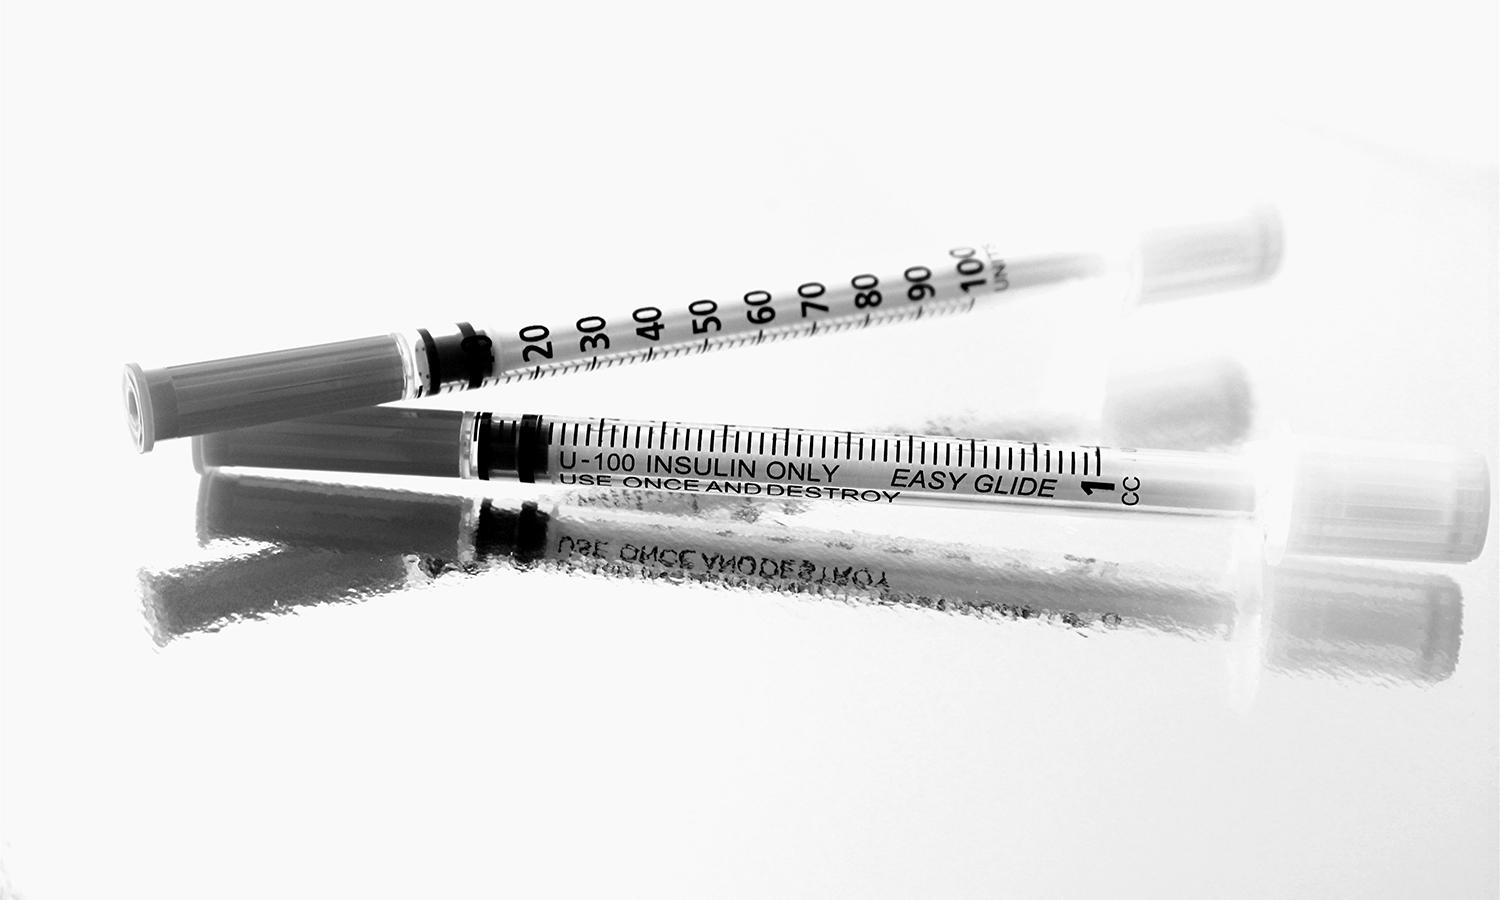 Syringes for insulin